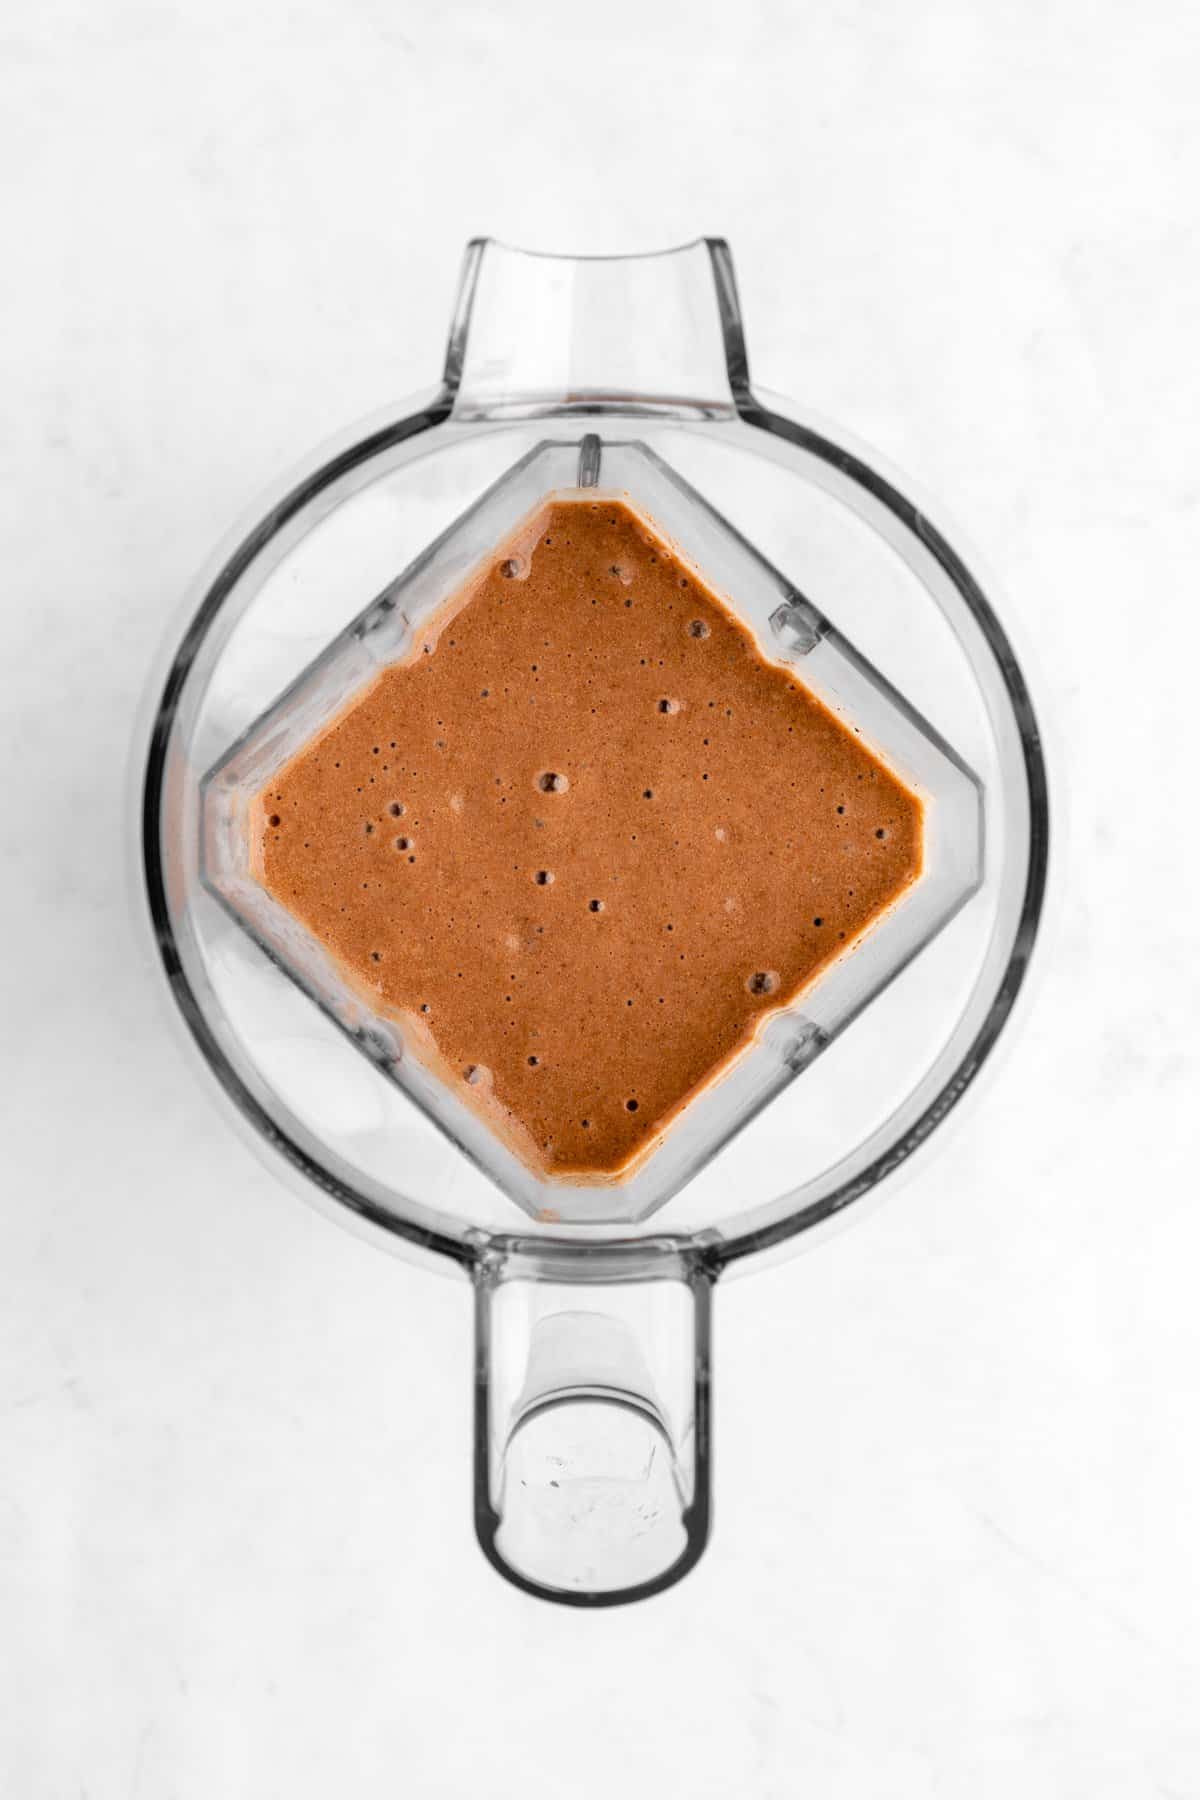 a blended chocolate banana smoothie inside a vitamix blender